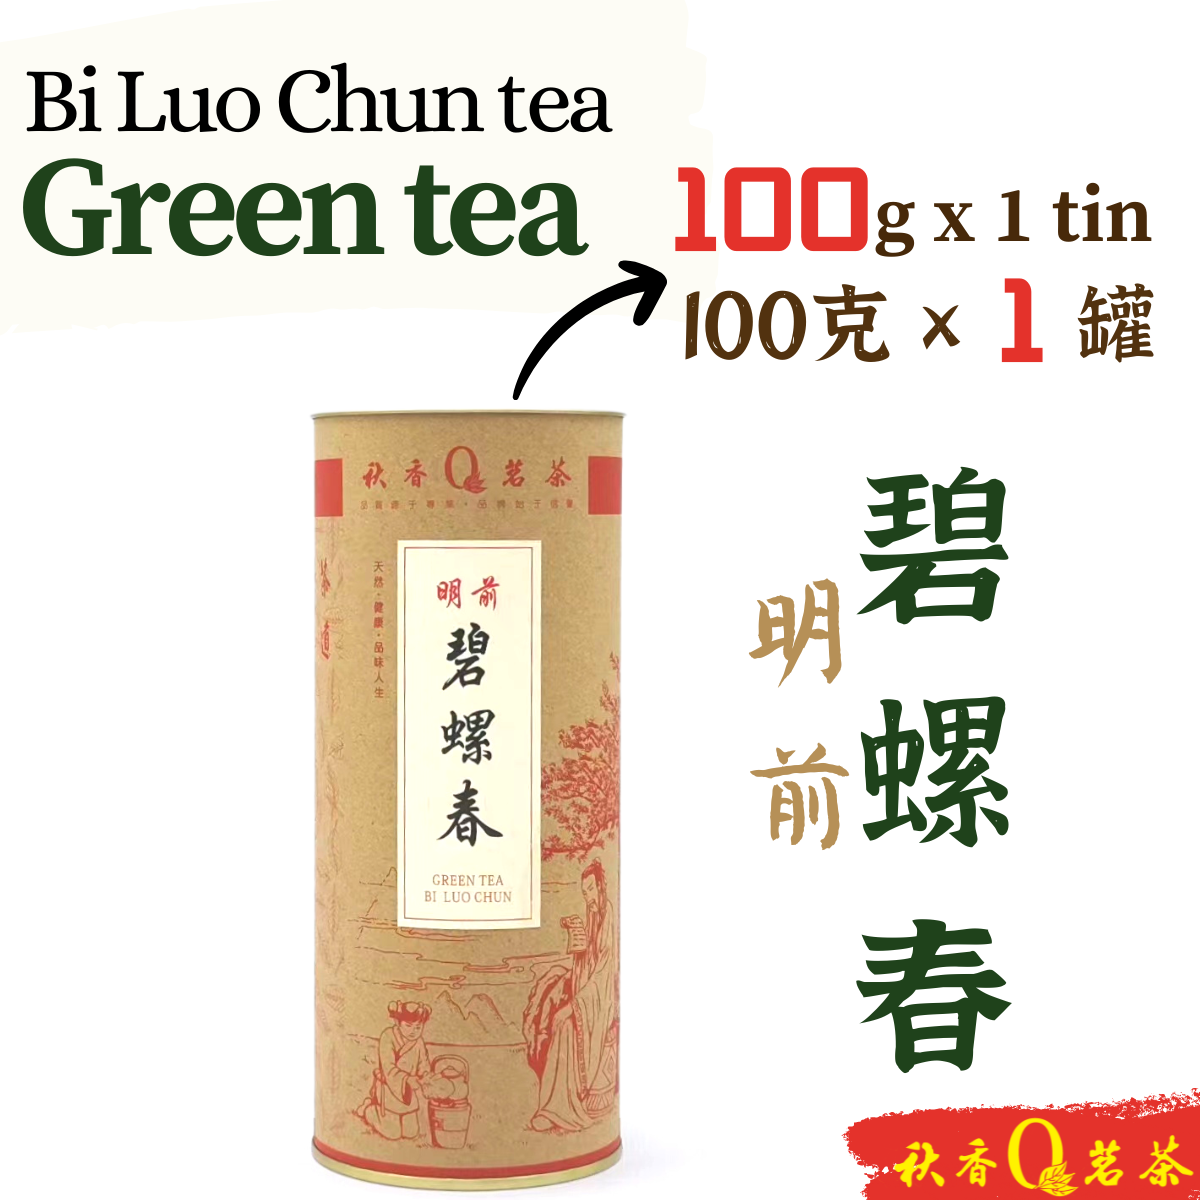 明前碧螺春 Bi Luo Chun tea (Early Spring)【100g/200g】 |【绿茶 Green tea】